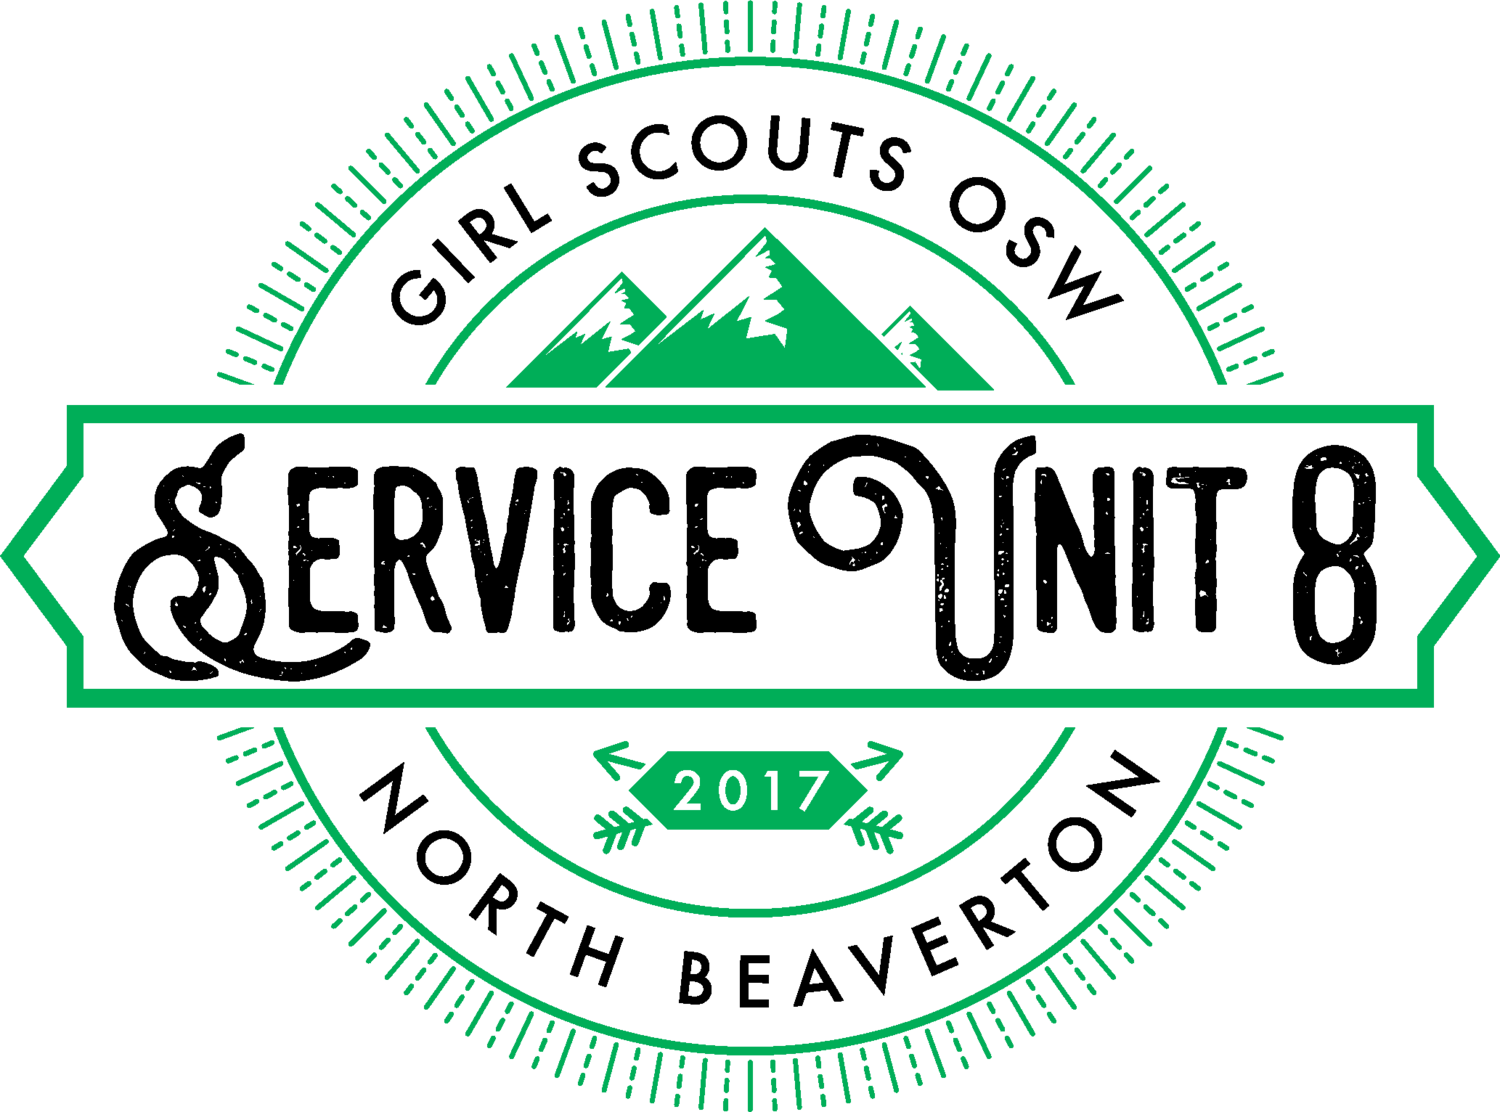 Girl Scout Camp Logo - Service Unit 8